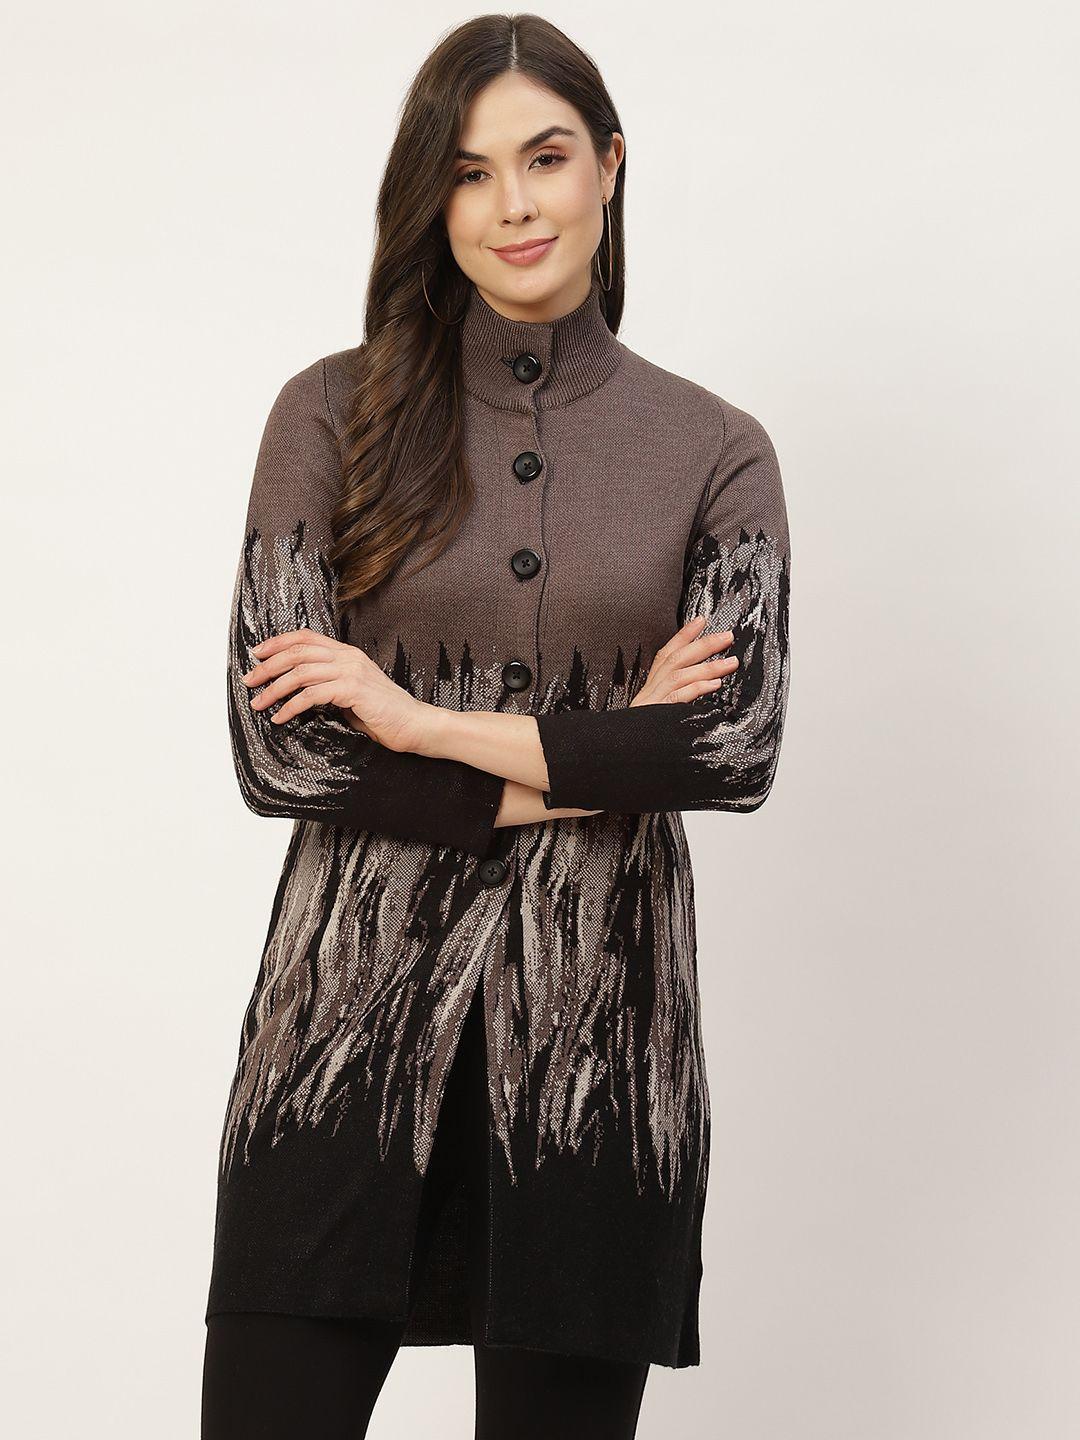 apsley-women-grey-&-black-abstract-printed-cardigan